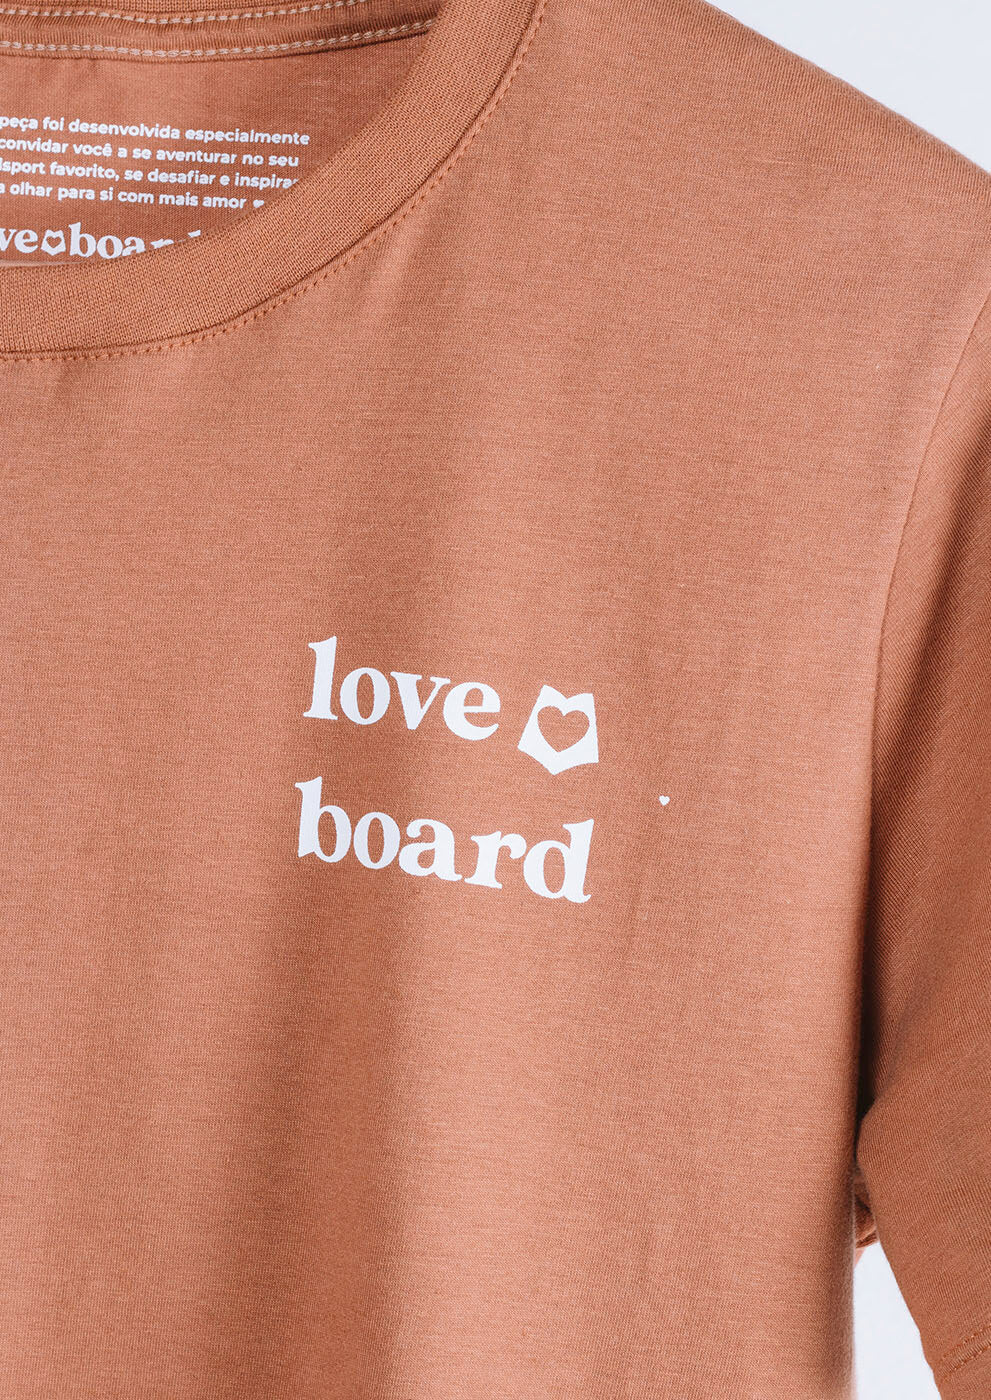 T-shirt areia Loveboard